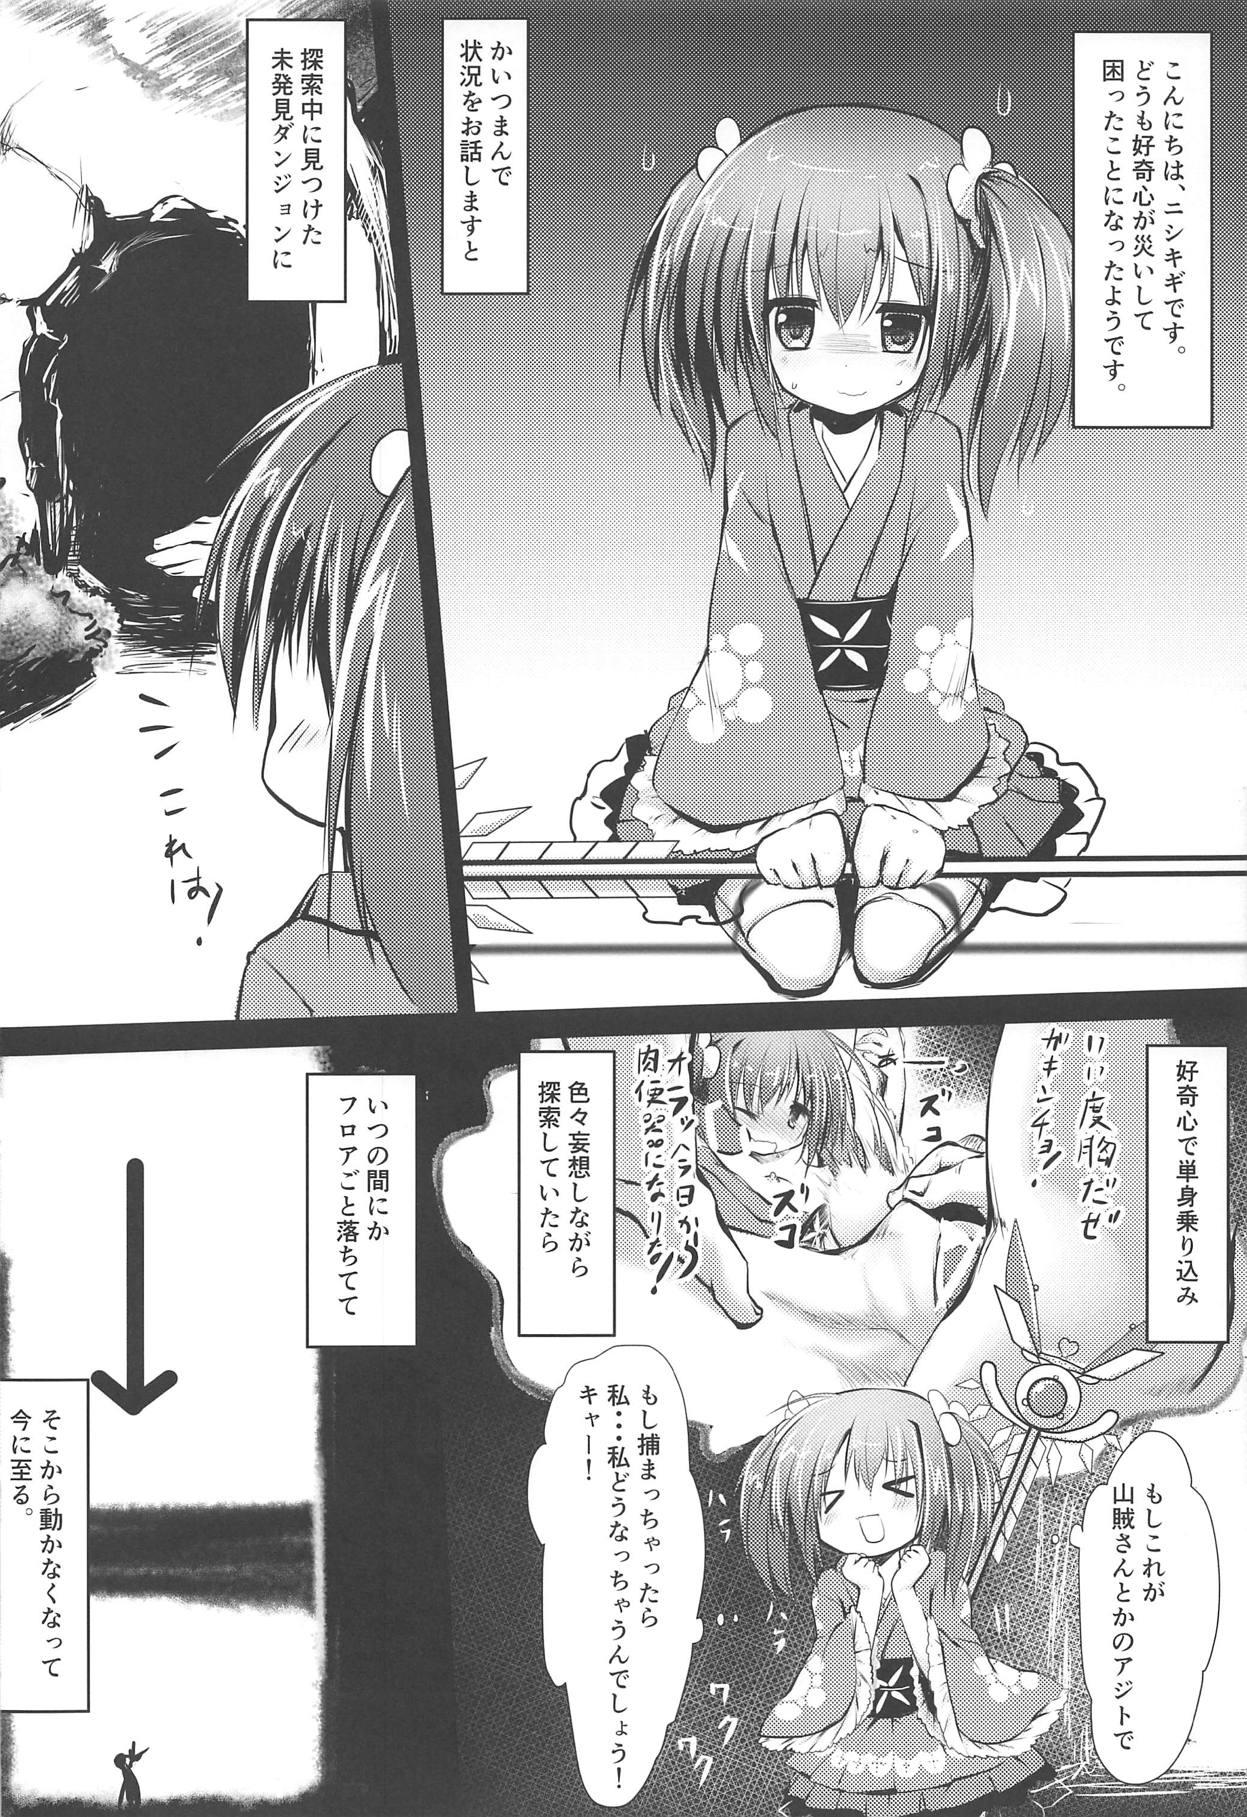 Bathroom Nishikigi VS Ero Trap D - Flower knight girl Fingering - Page 3